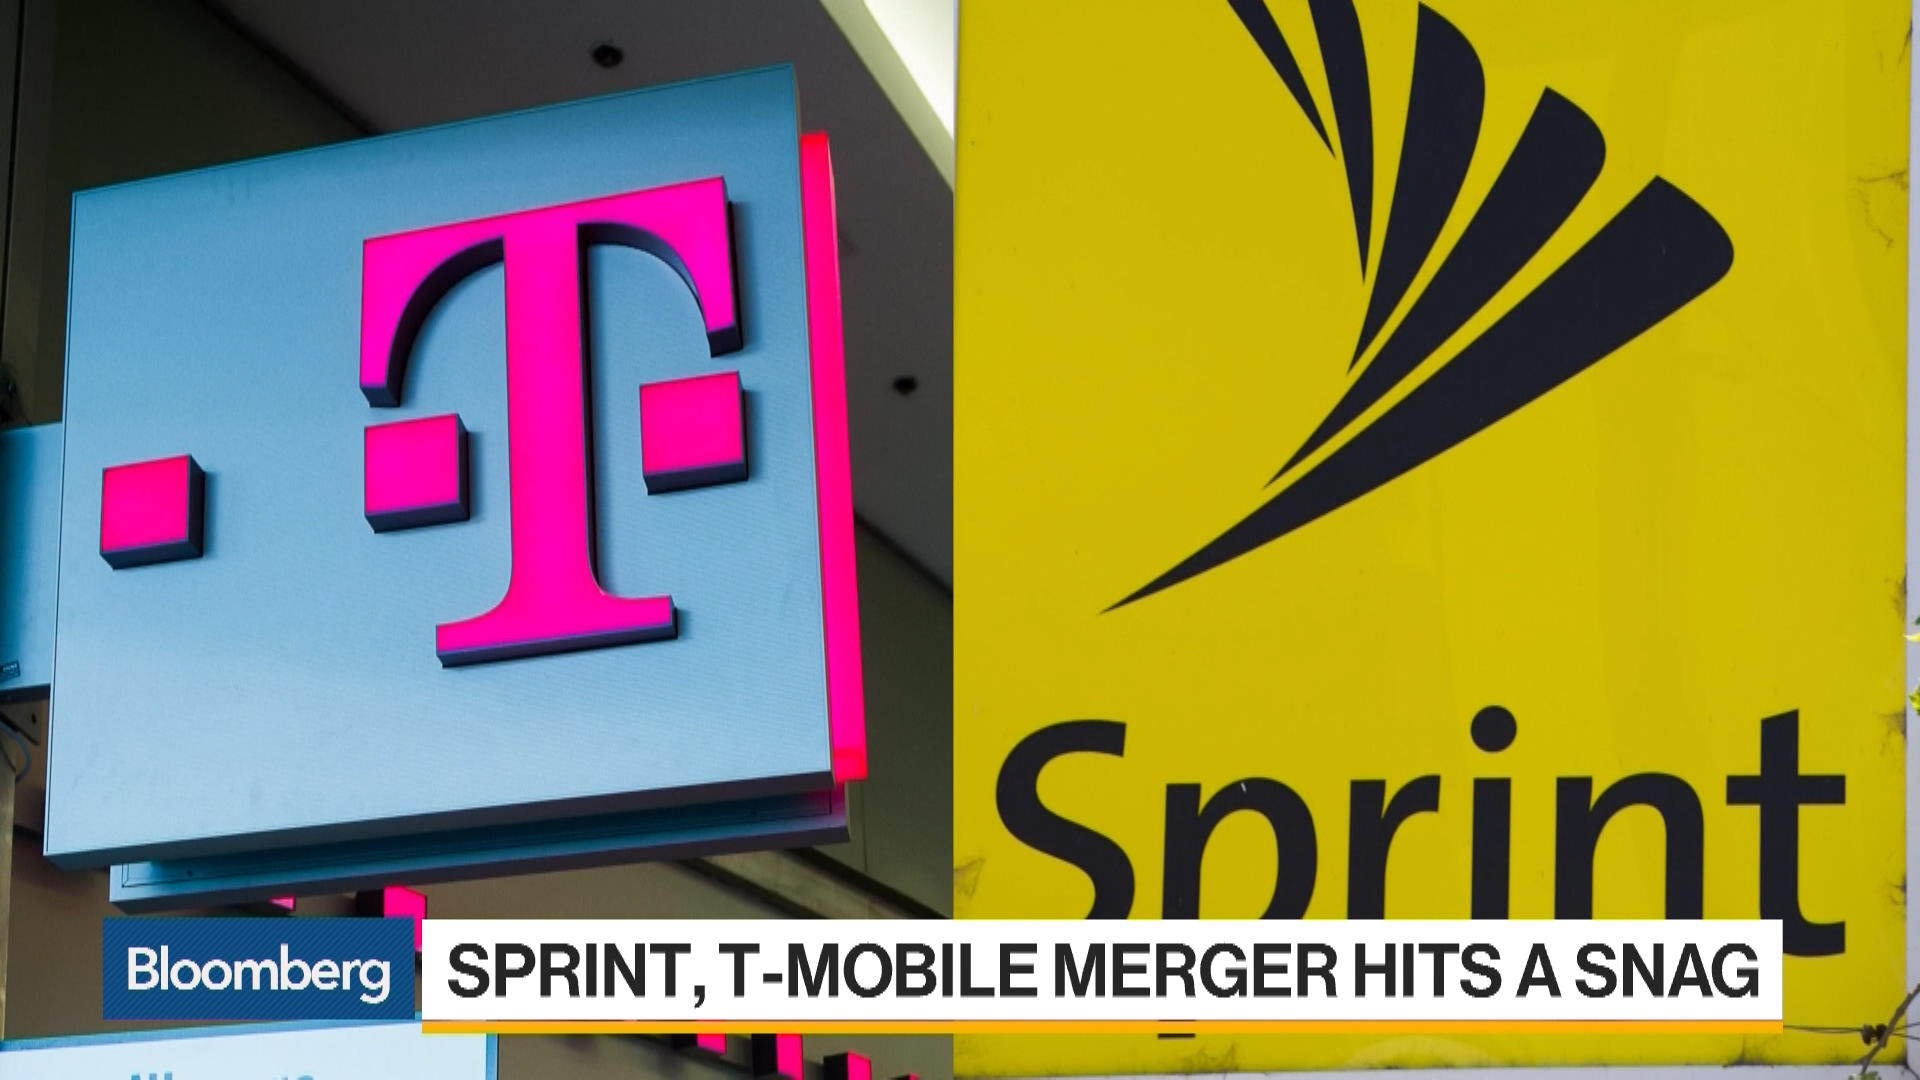 Sprint, T-Mobile Merger Talks Hit a Snag - Bloomberg1920 x 1080